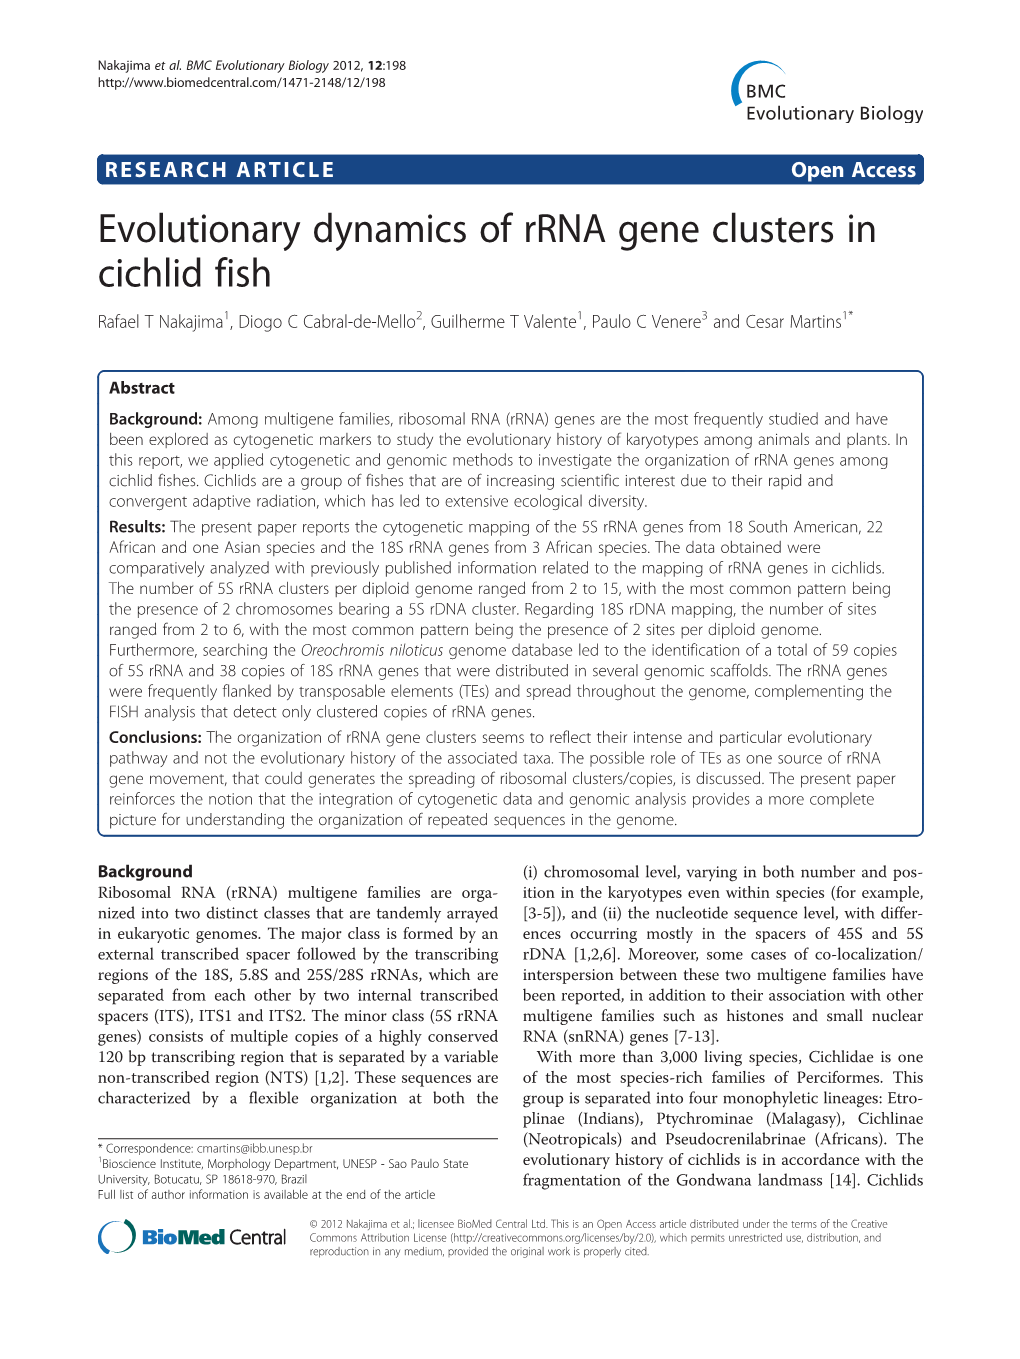 Evolutionary Dynamics of Rrna Gene Clusters in Cichlid Fish Rafael T Nakajima1, Diogo C Cabral-De-Mello2, Guilherme T Valente1, Paulo C Venere3 and Cesar Martins1*